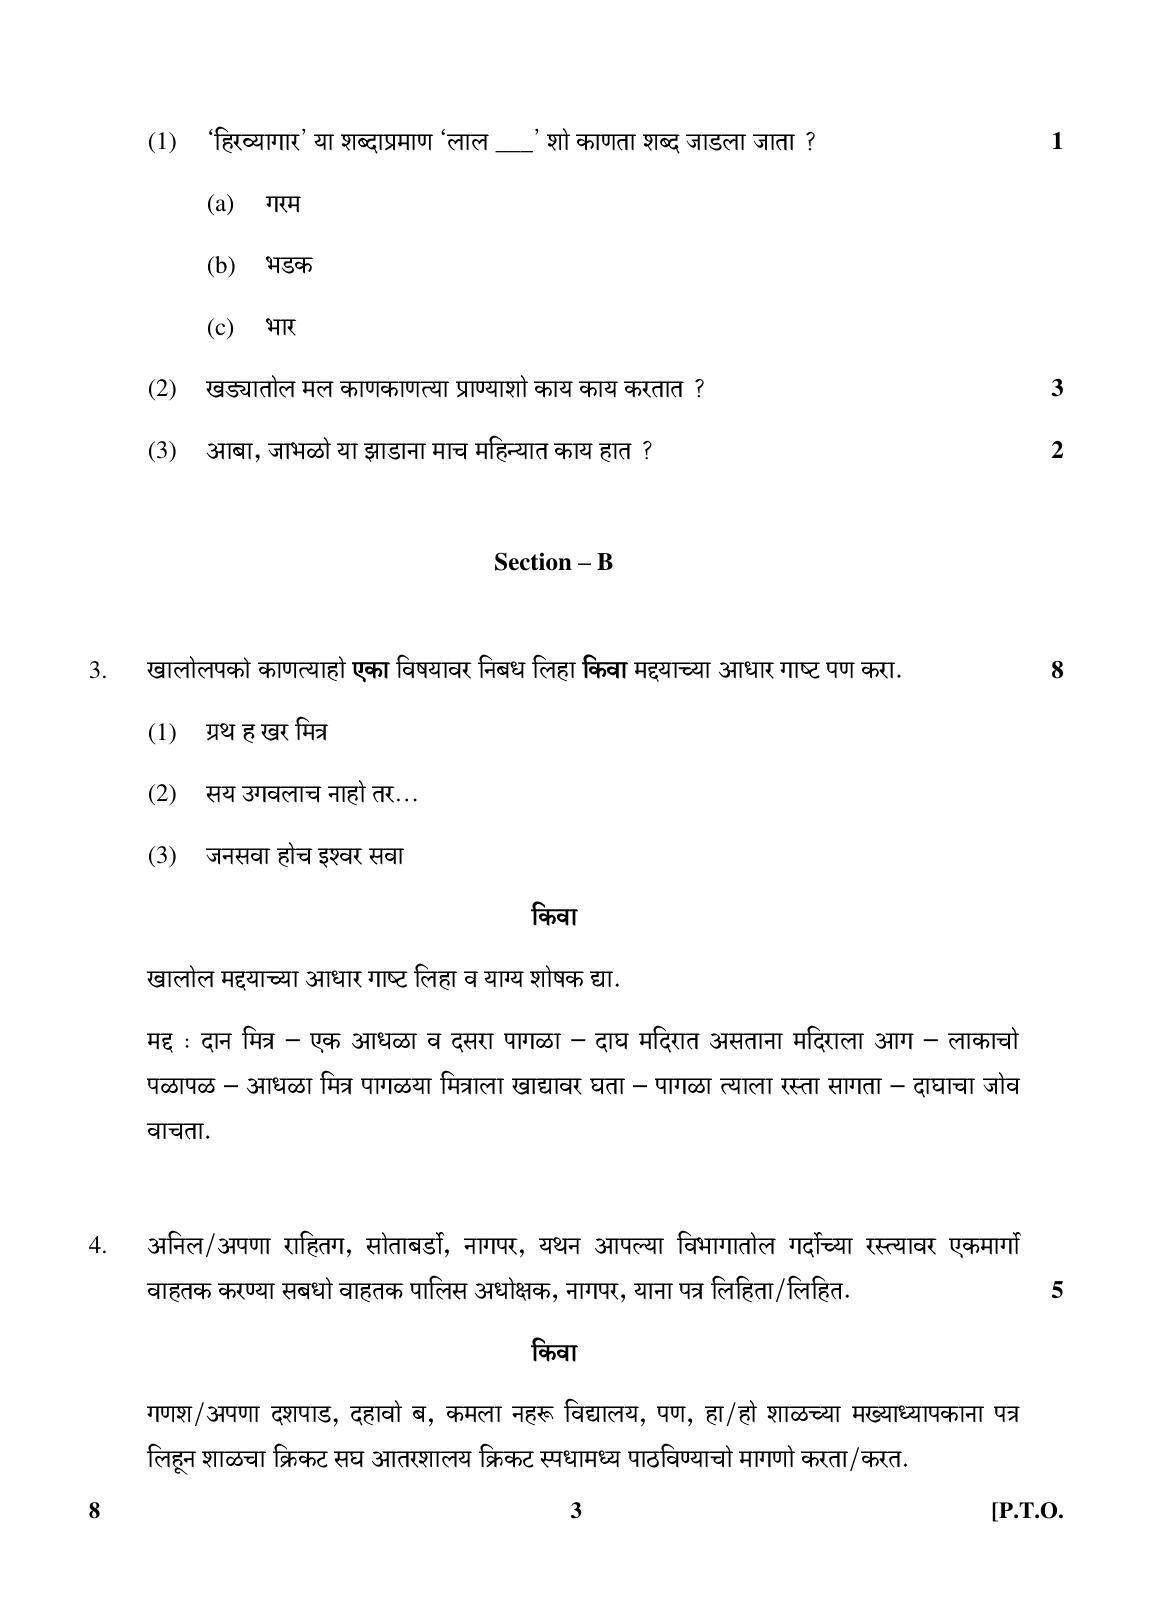 CBSE Class 10 8 (Marathi) 2018 Question Paper - Page 3